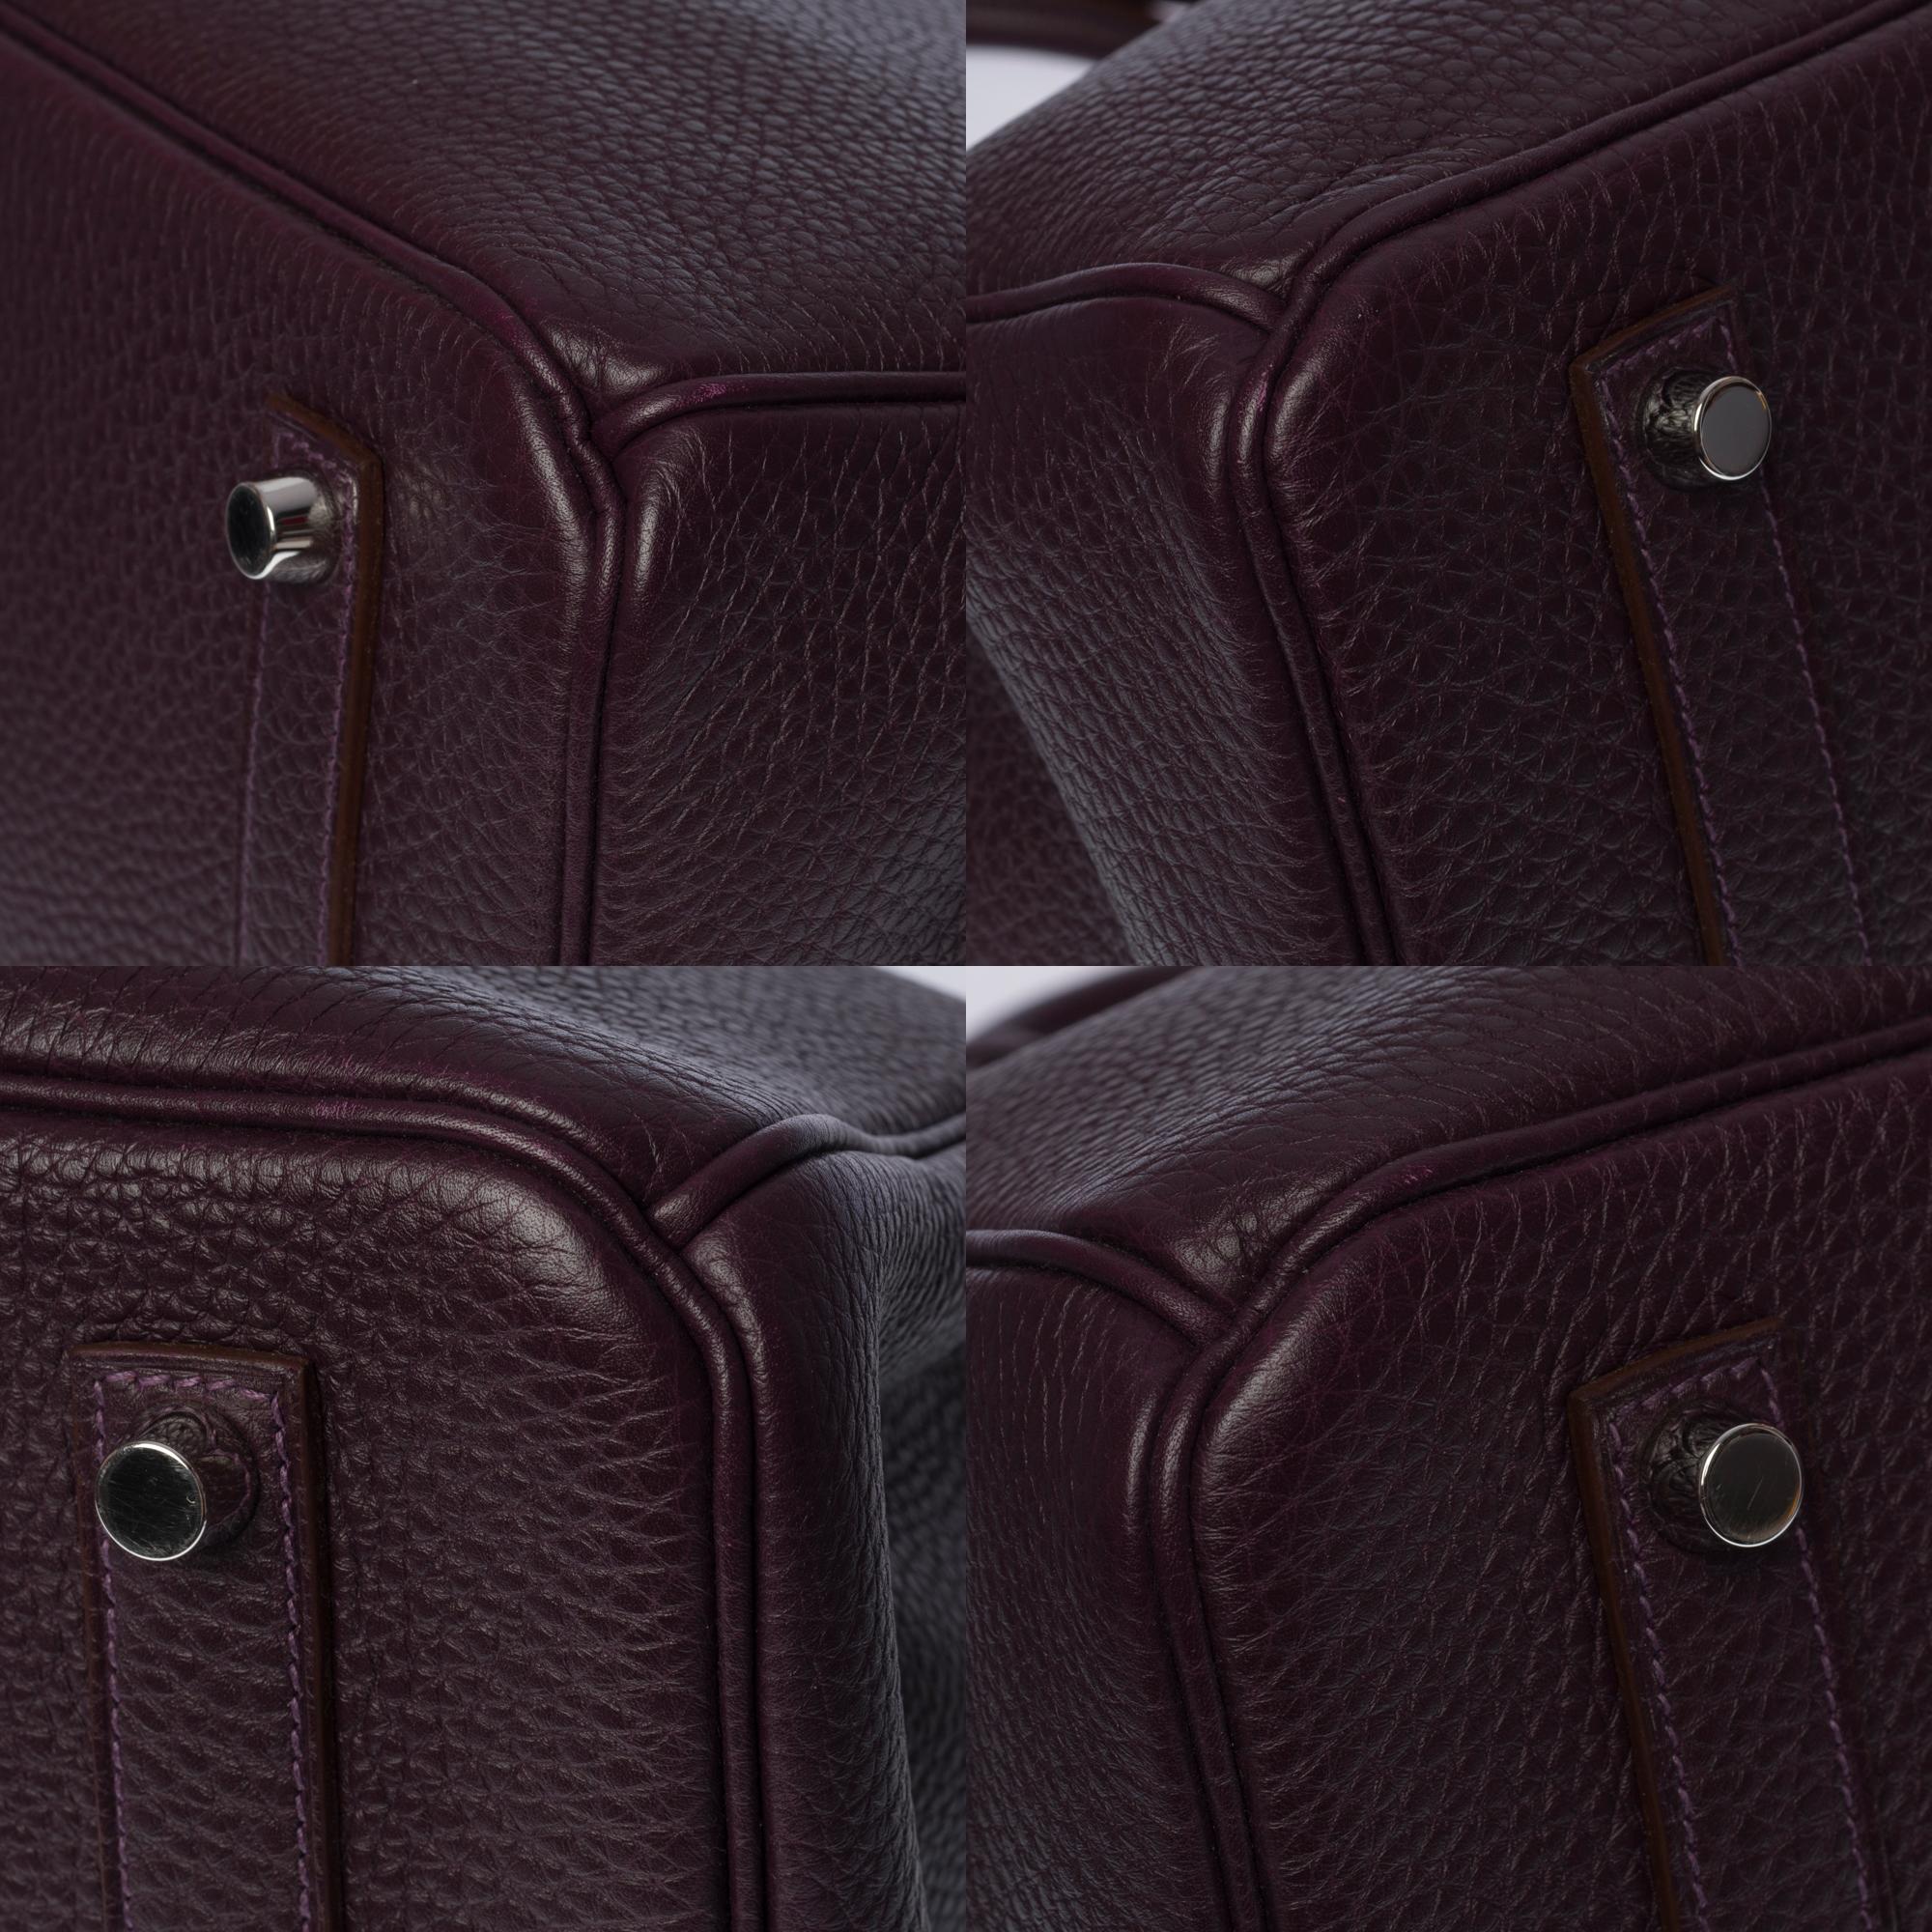 Amazing Hermès Birkin 35 handbag in raisin Togo leather, SHW 5